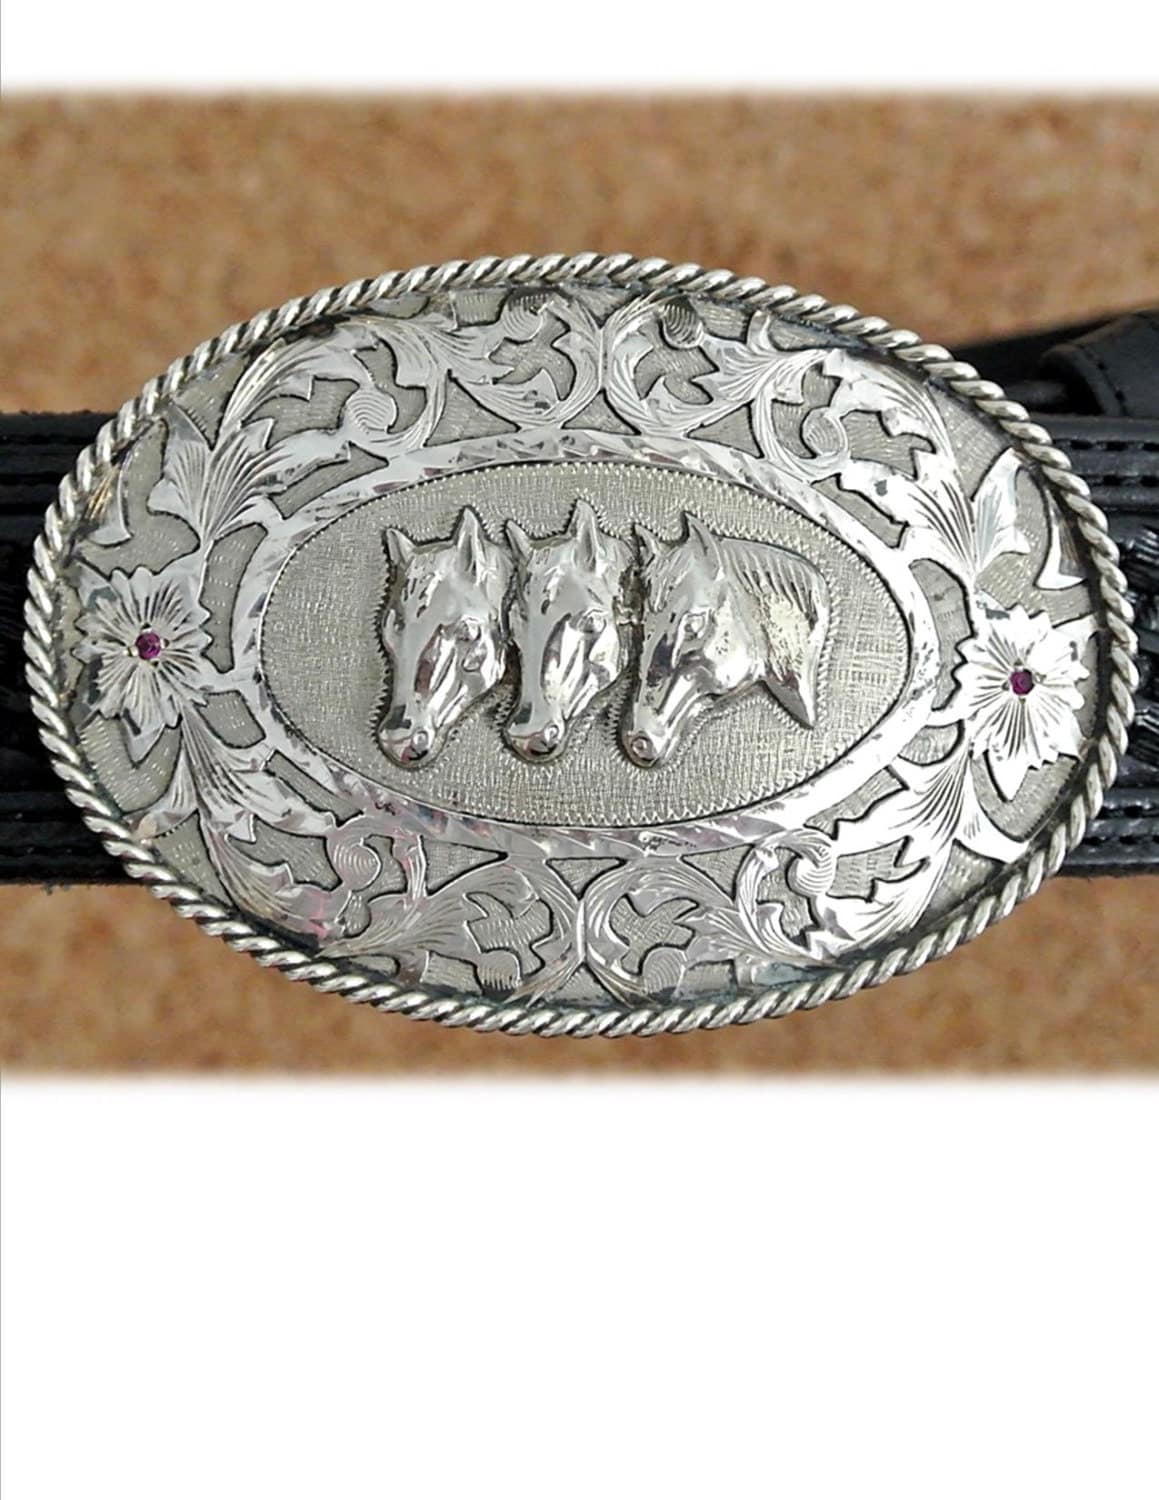 Vintage Belt Buckle Sterling Silver Western by ChristysAtticDoor